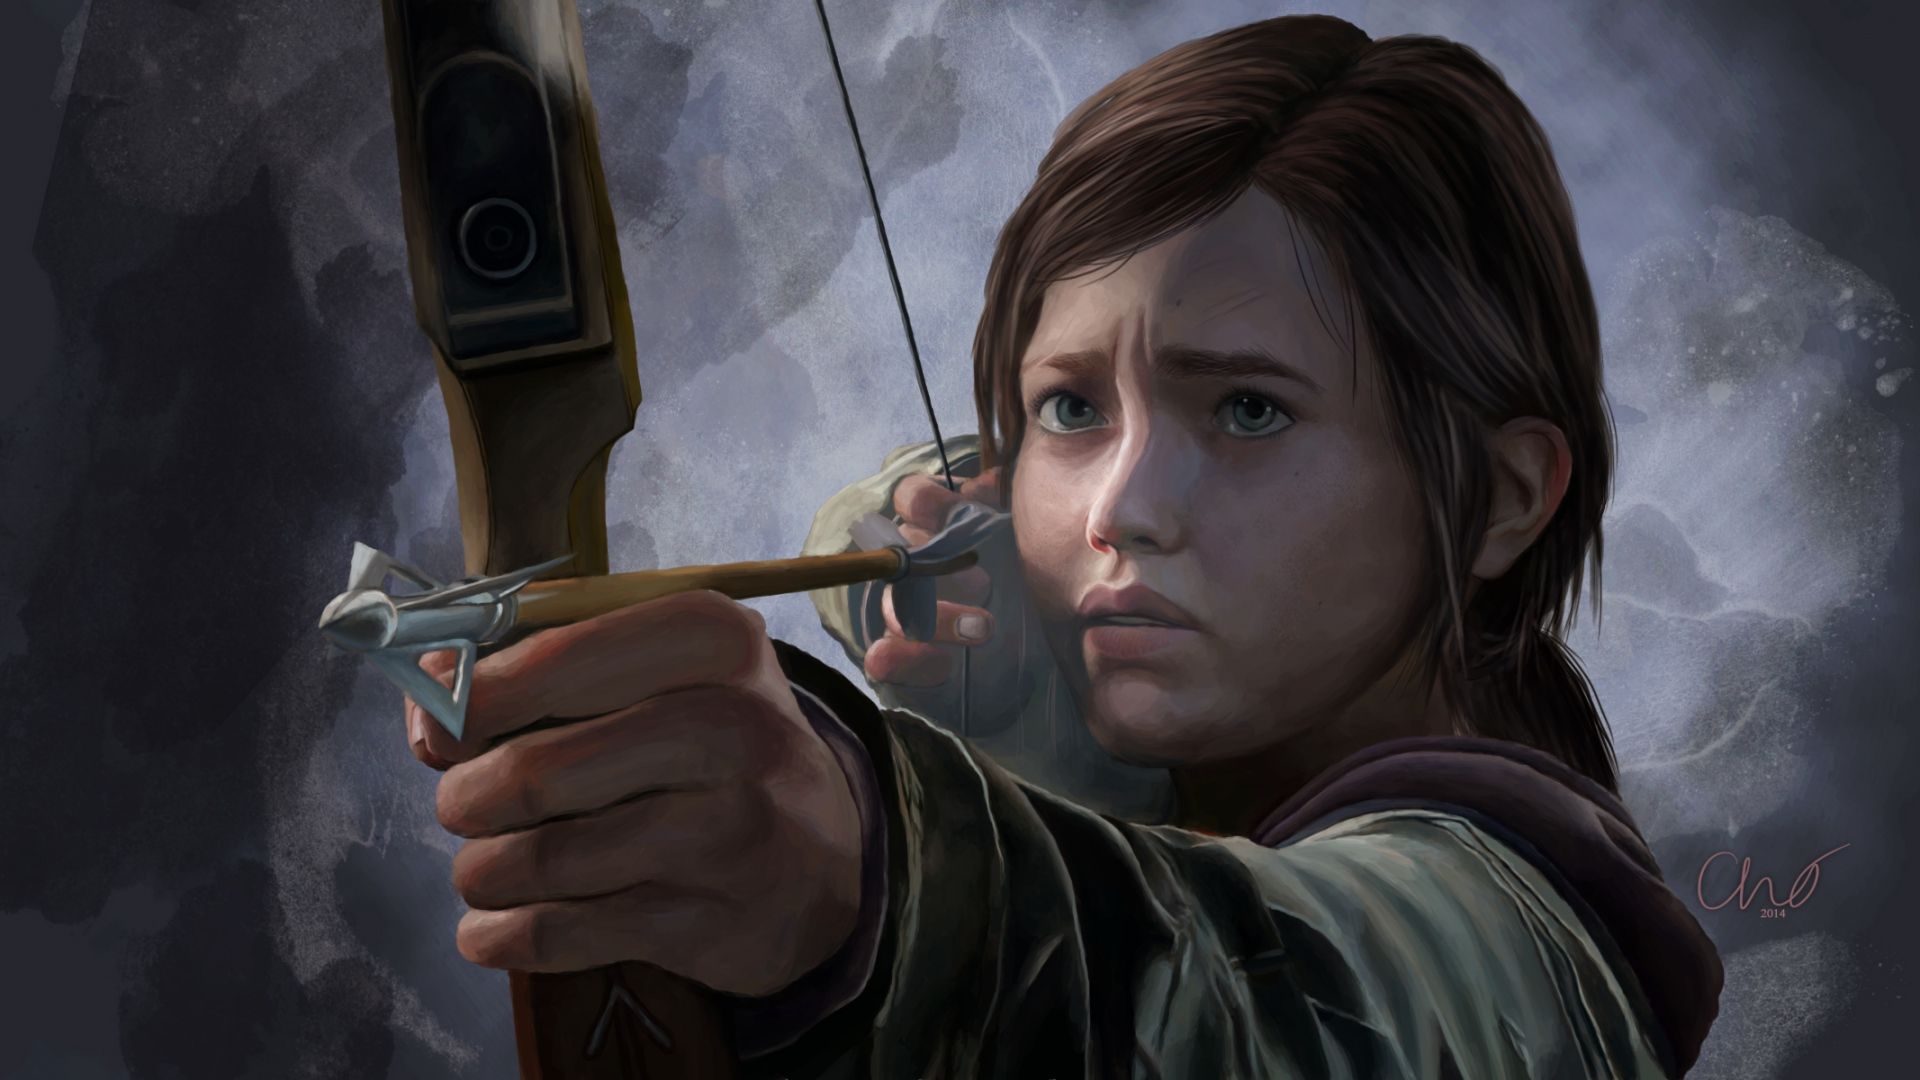 The Last of Us 2 #Ellie #1080P #wallpaper #hdwallpaper #desktop